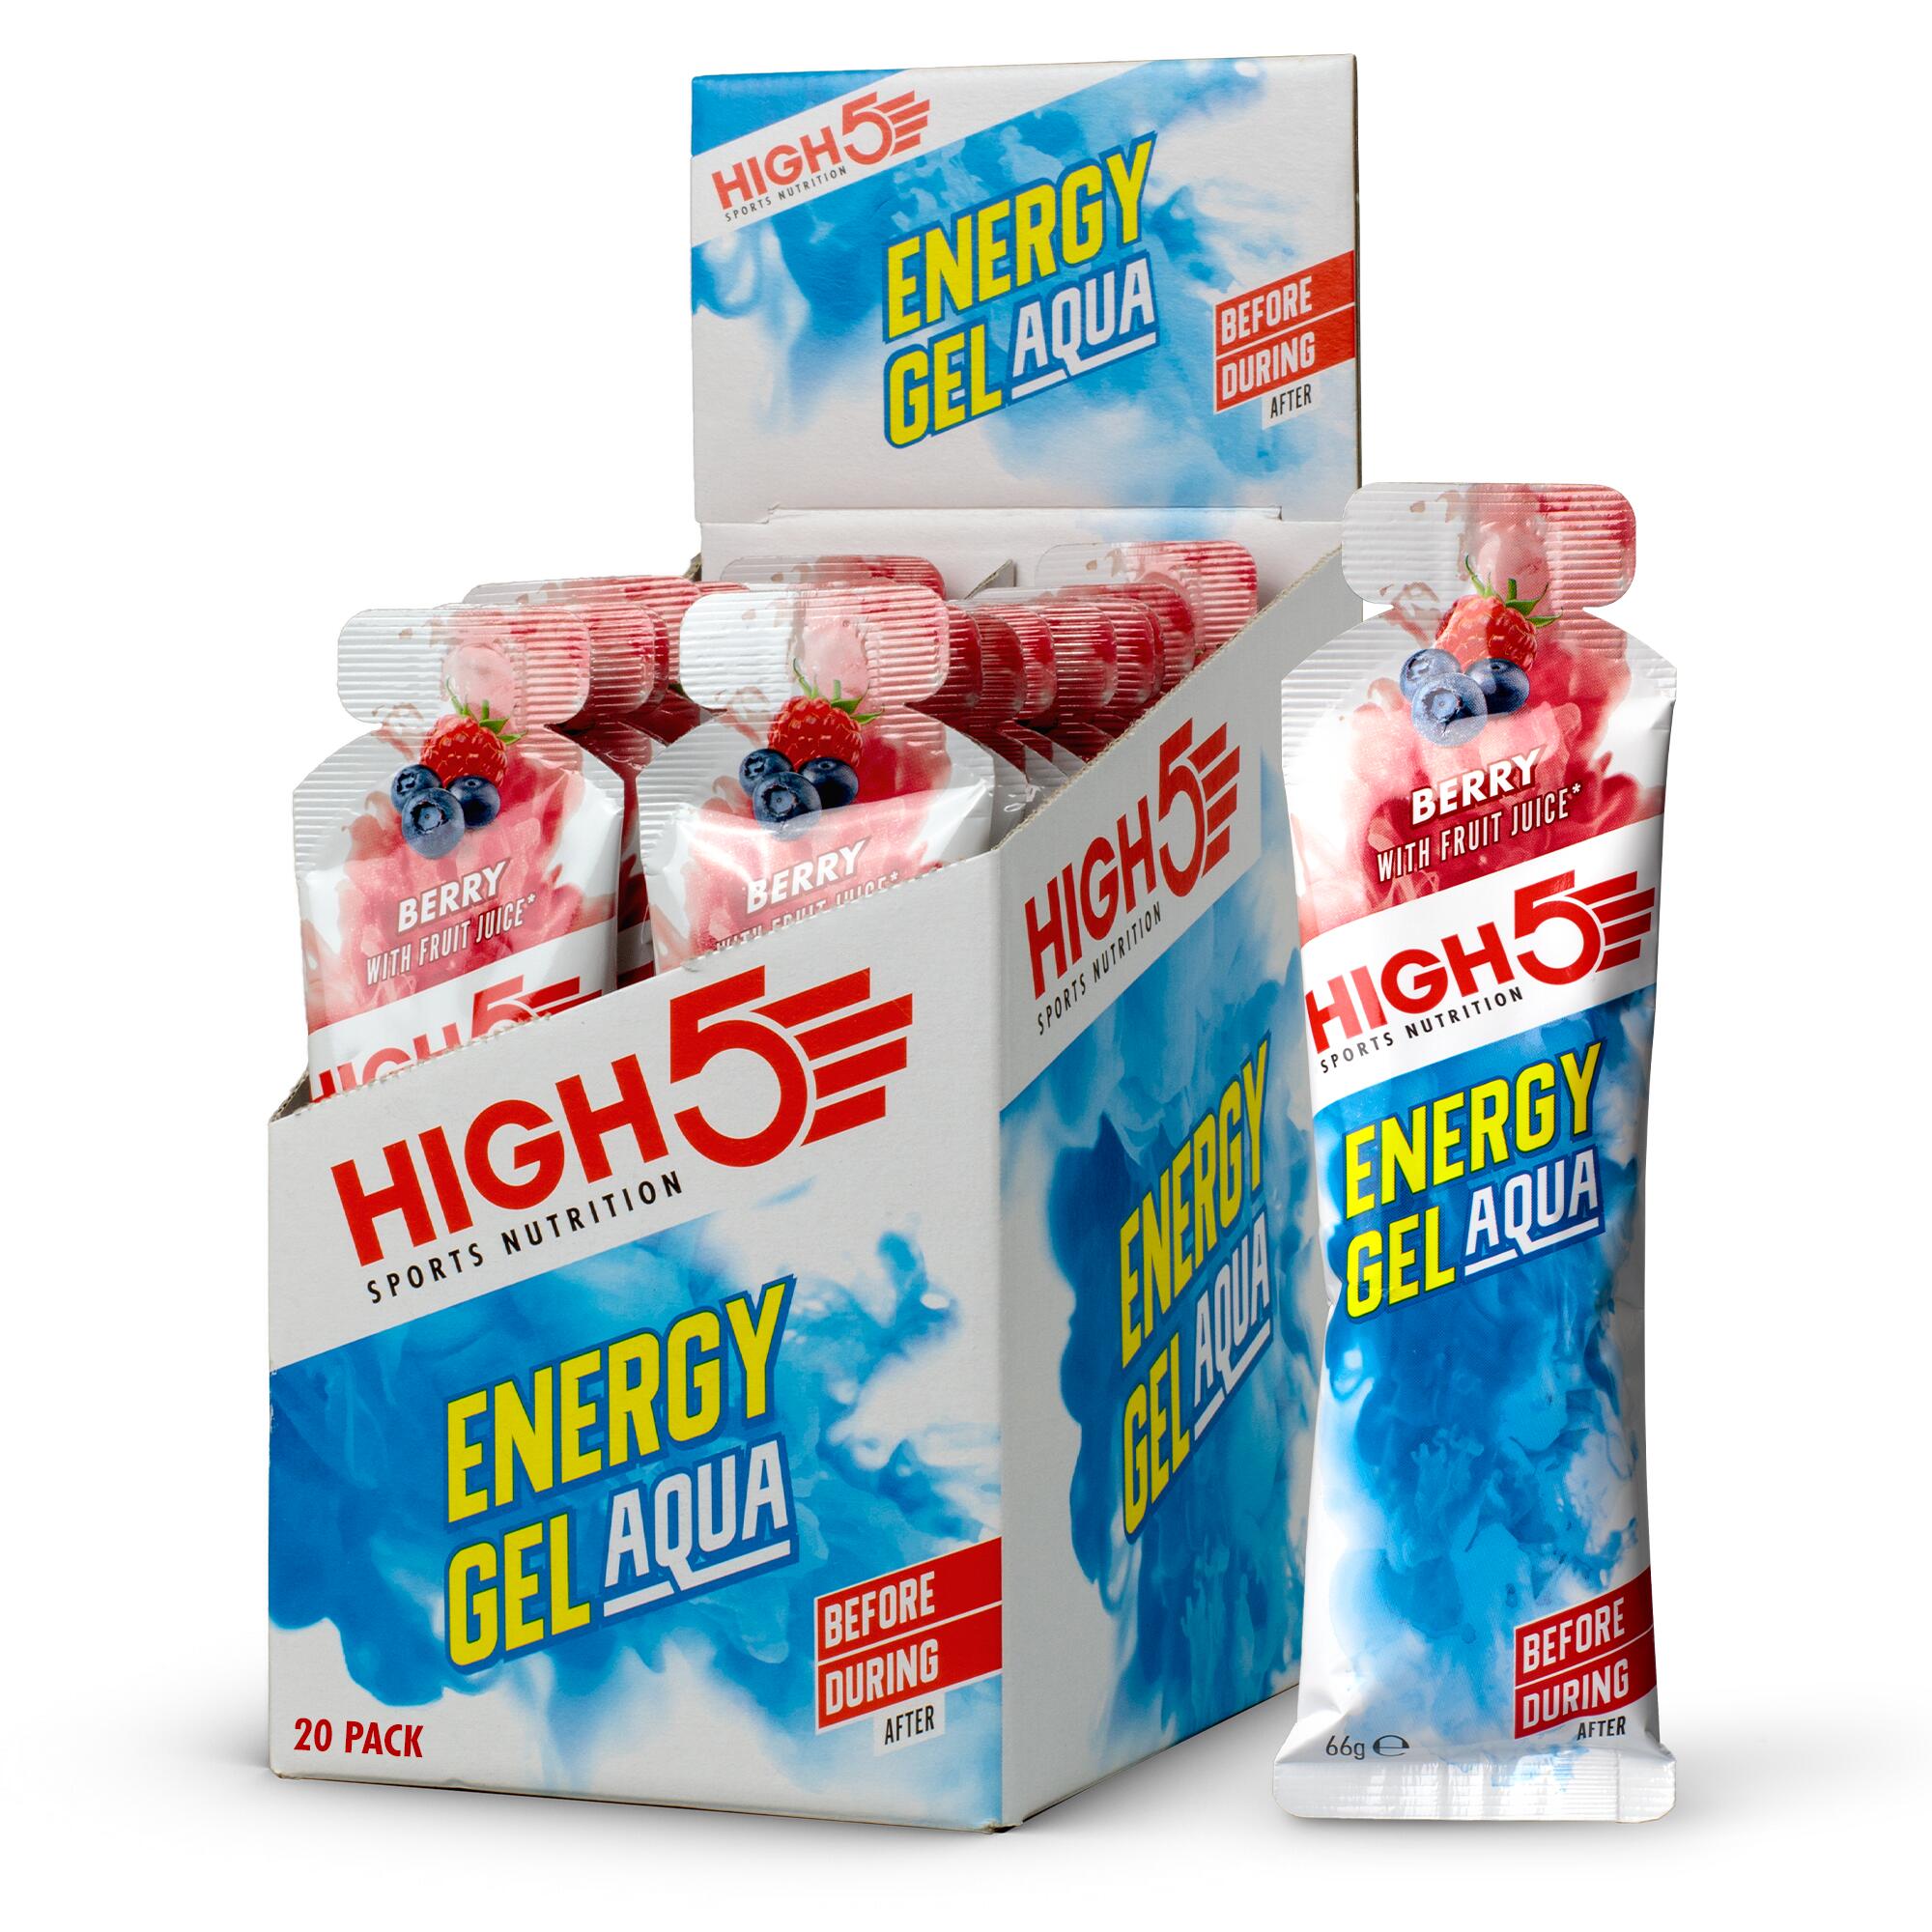 HIGH5 Energy Gel Acqua Berry - 66g single Gel